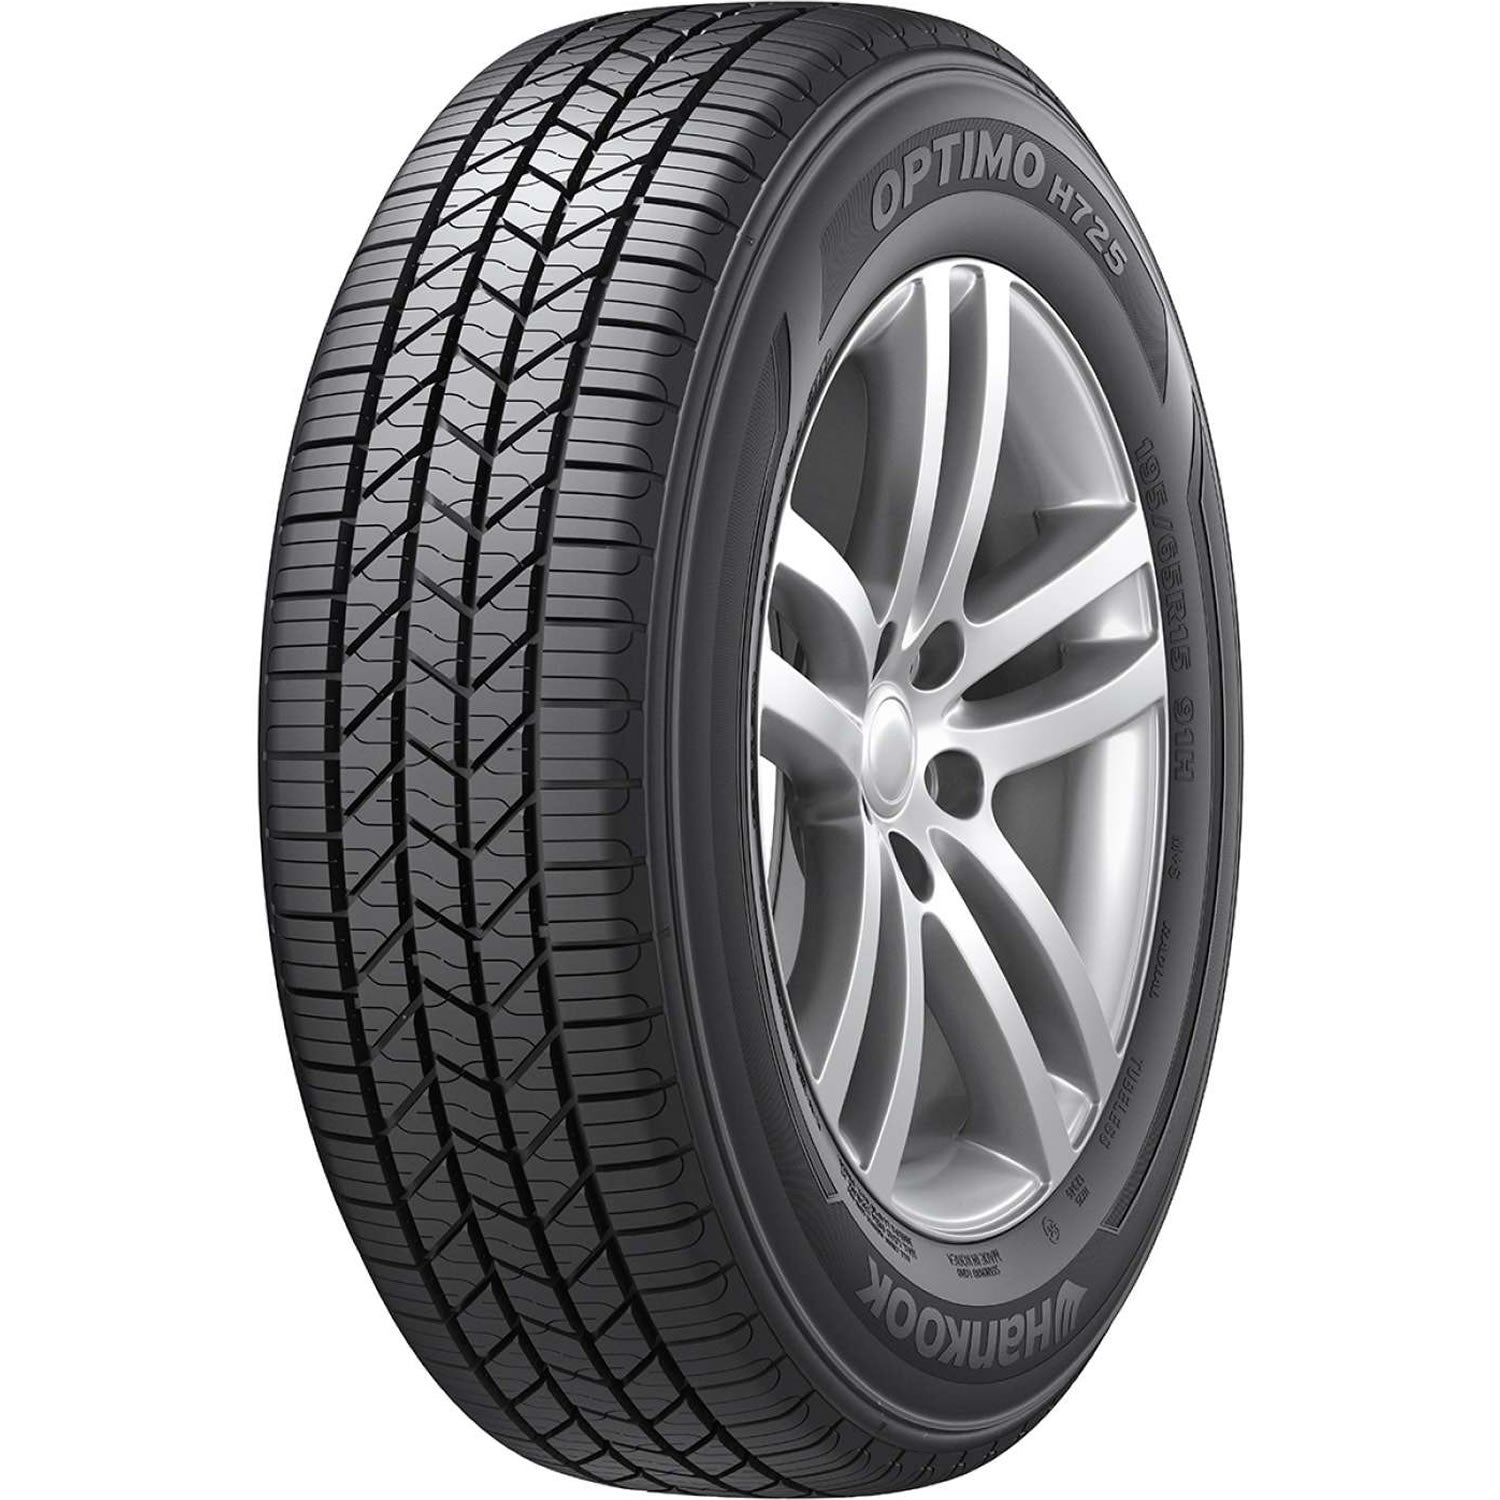 HANKOOK OPTIMO H725 205/55R16 (24.9X8.4R 16) Tires